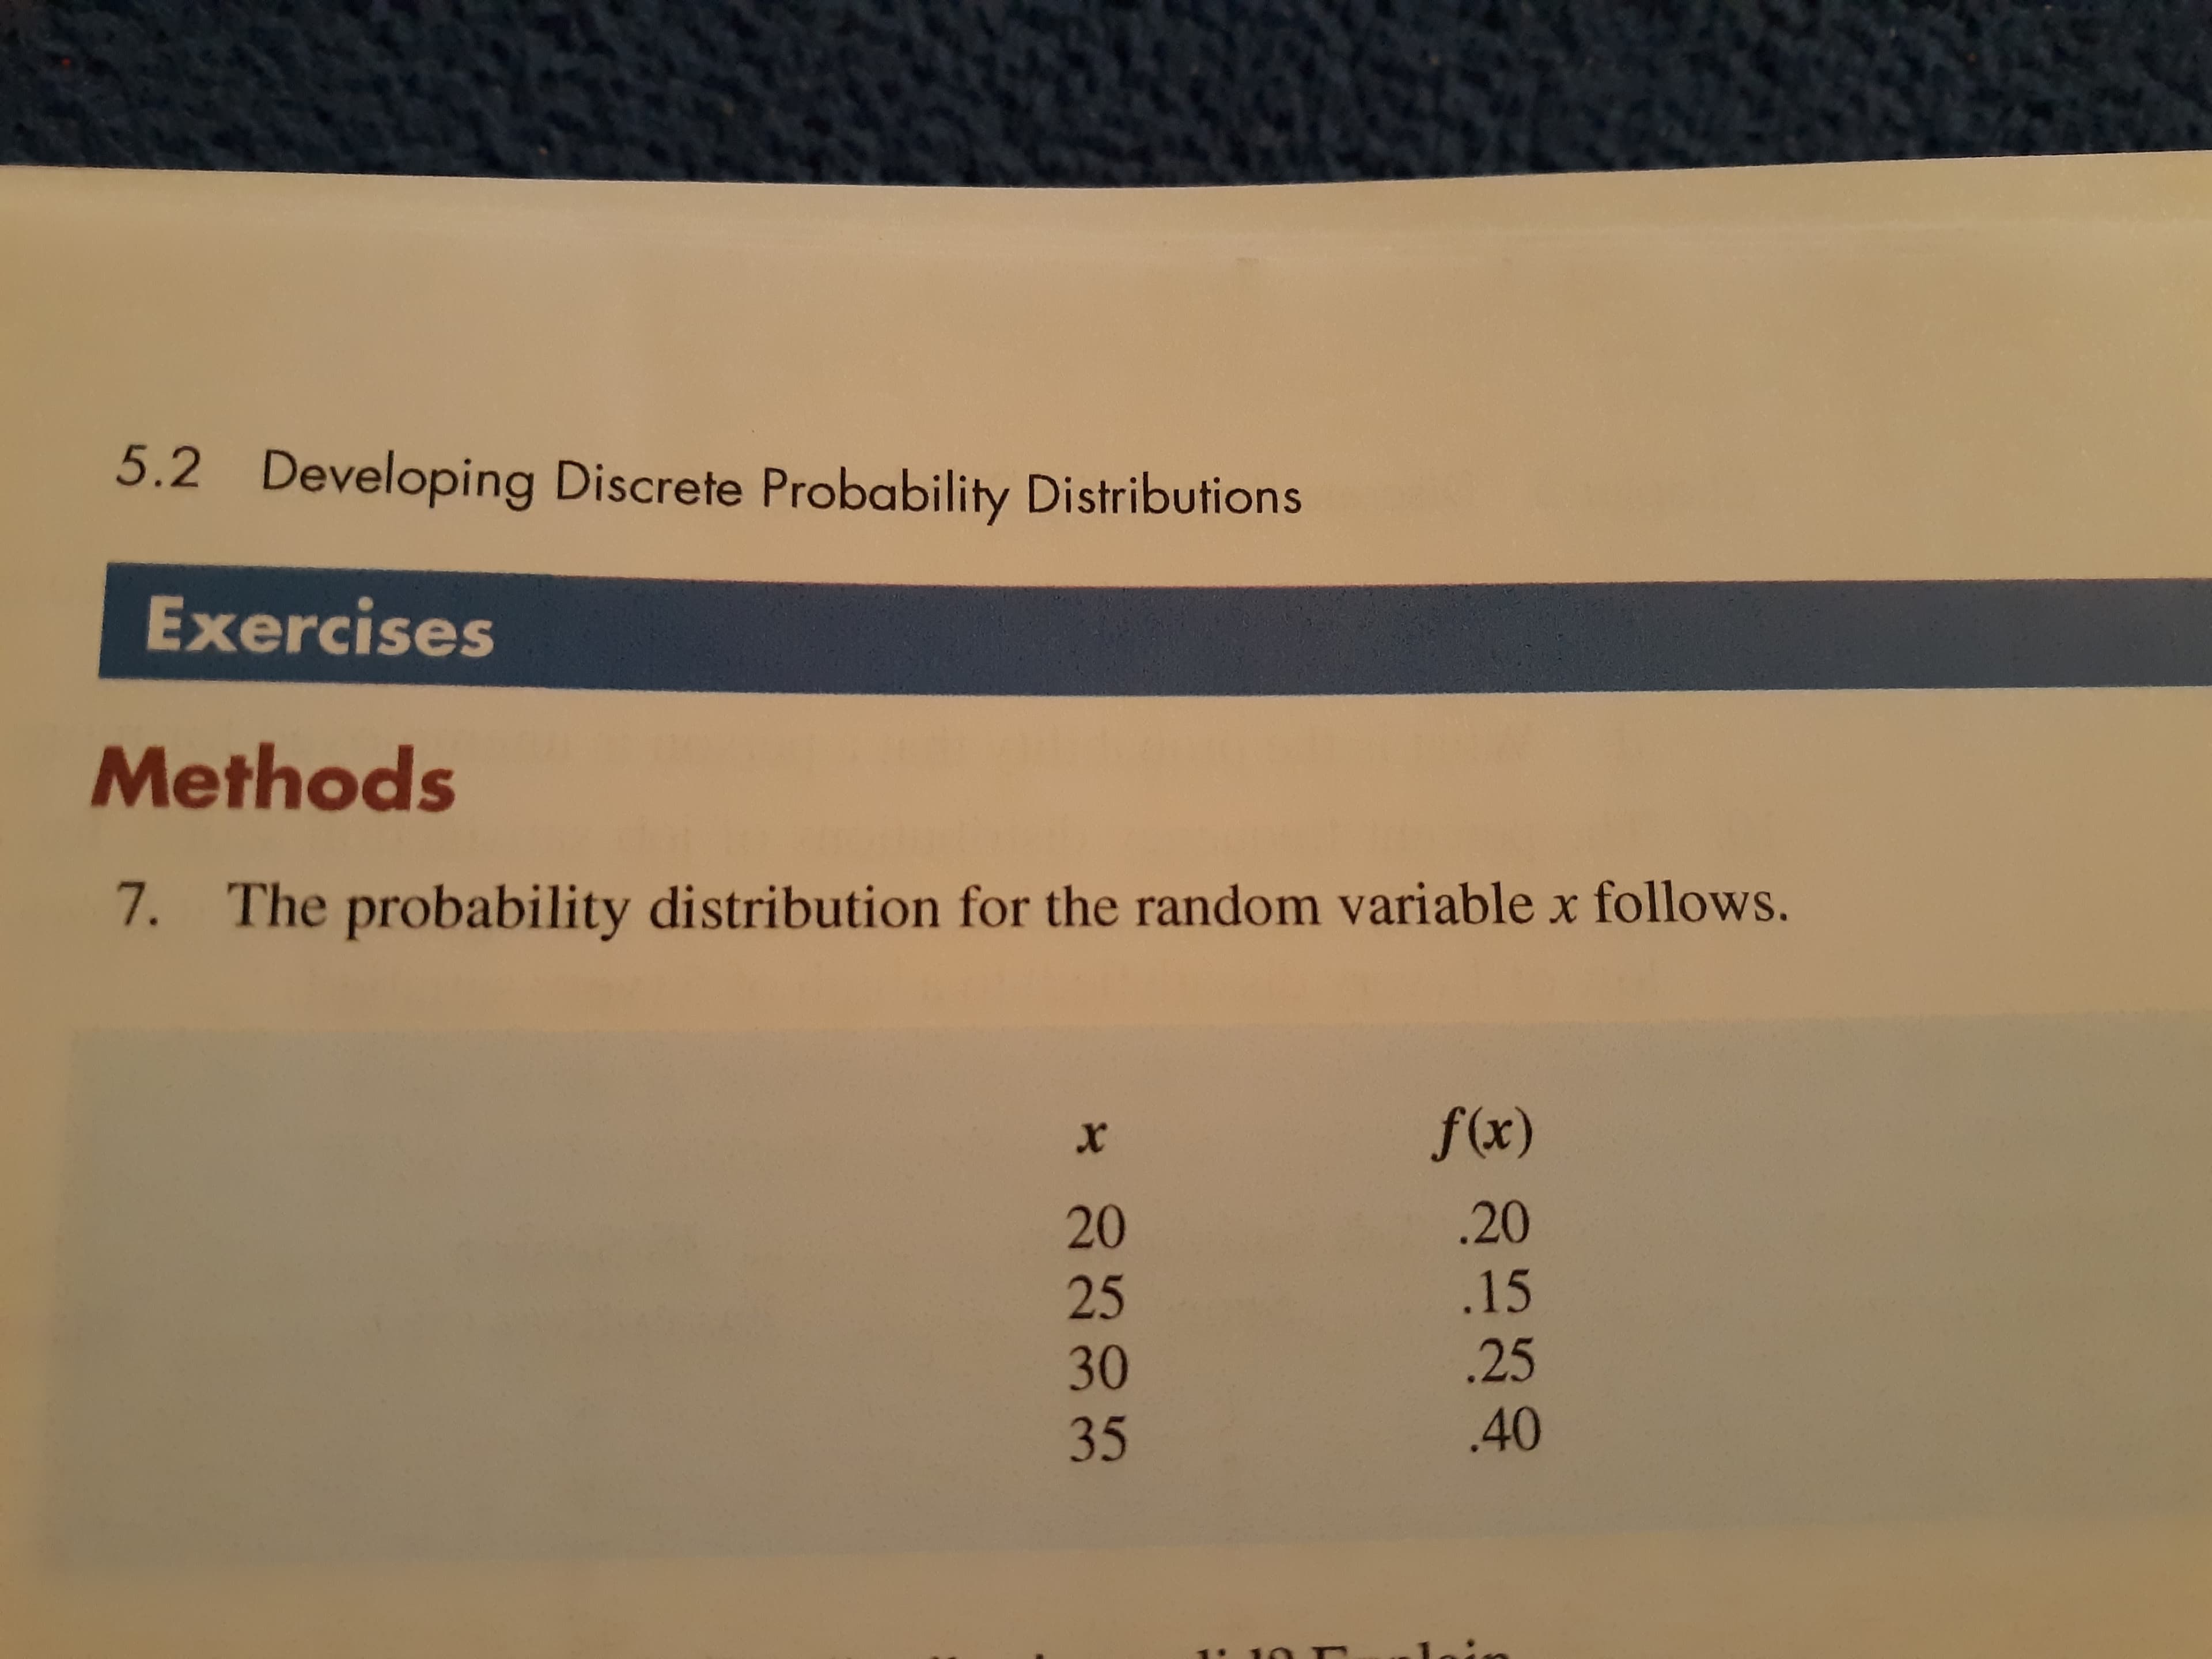 5.2 Developing Discrete Probability Distributions
Exercises
Methods
7. The probability distribution for the random variable x follows.
f(x)
20
.20
25
.15
30
.25
35
.40
